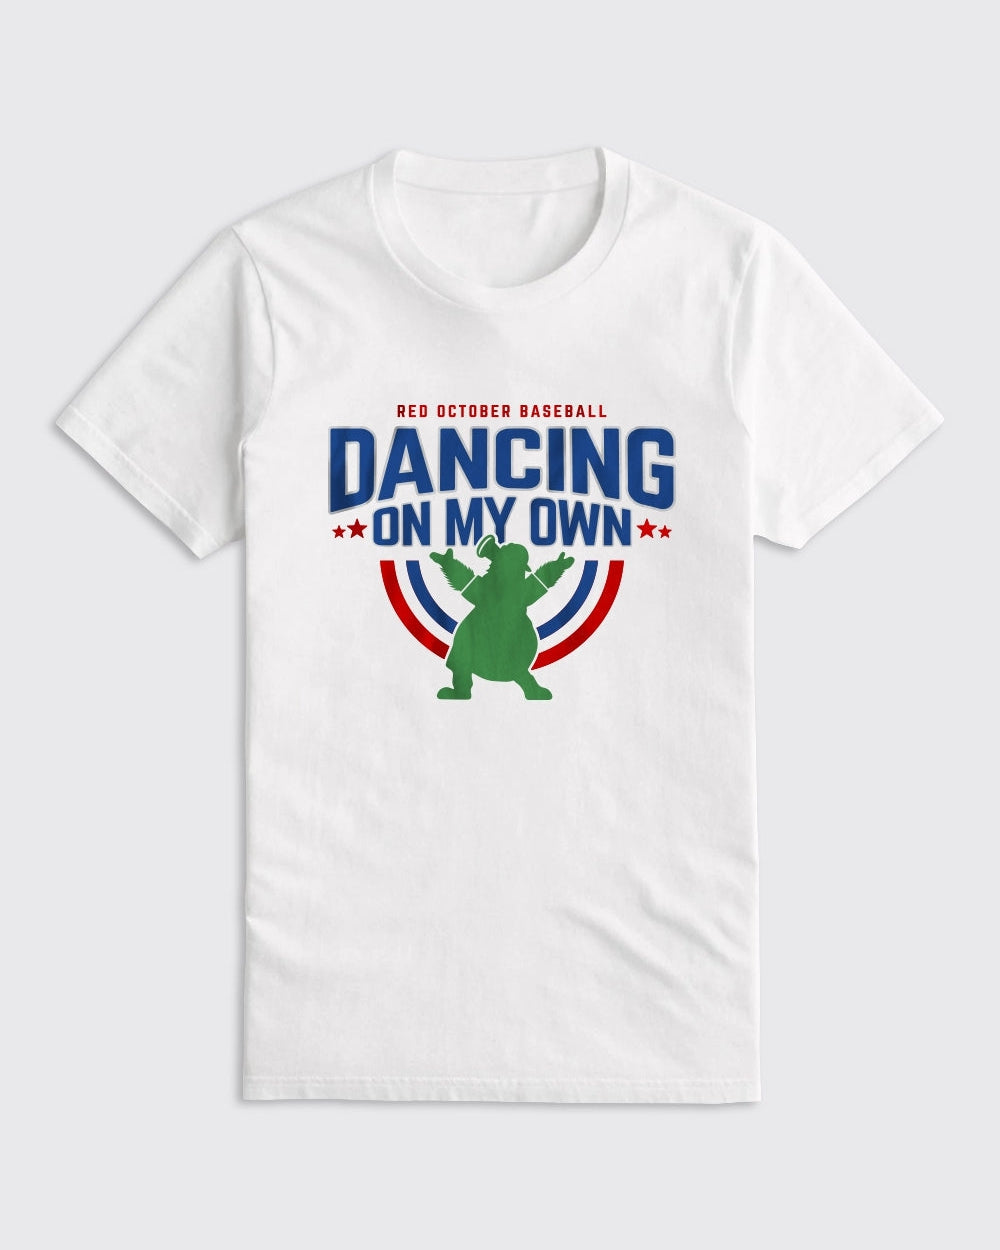 Phillies Dancing On My Own City Night T-Shirt Philadelphia Phillies